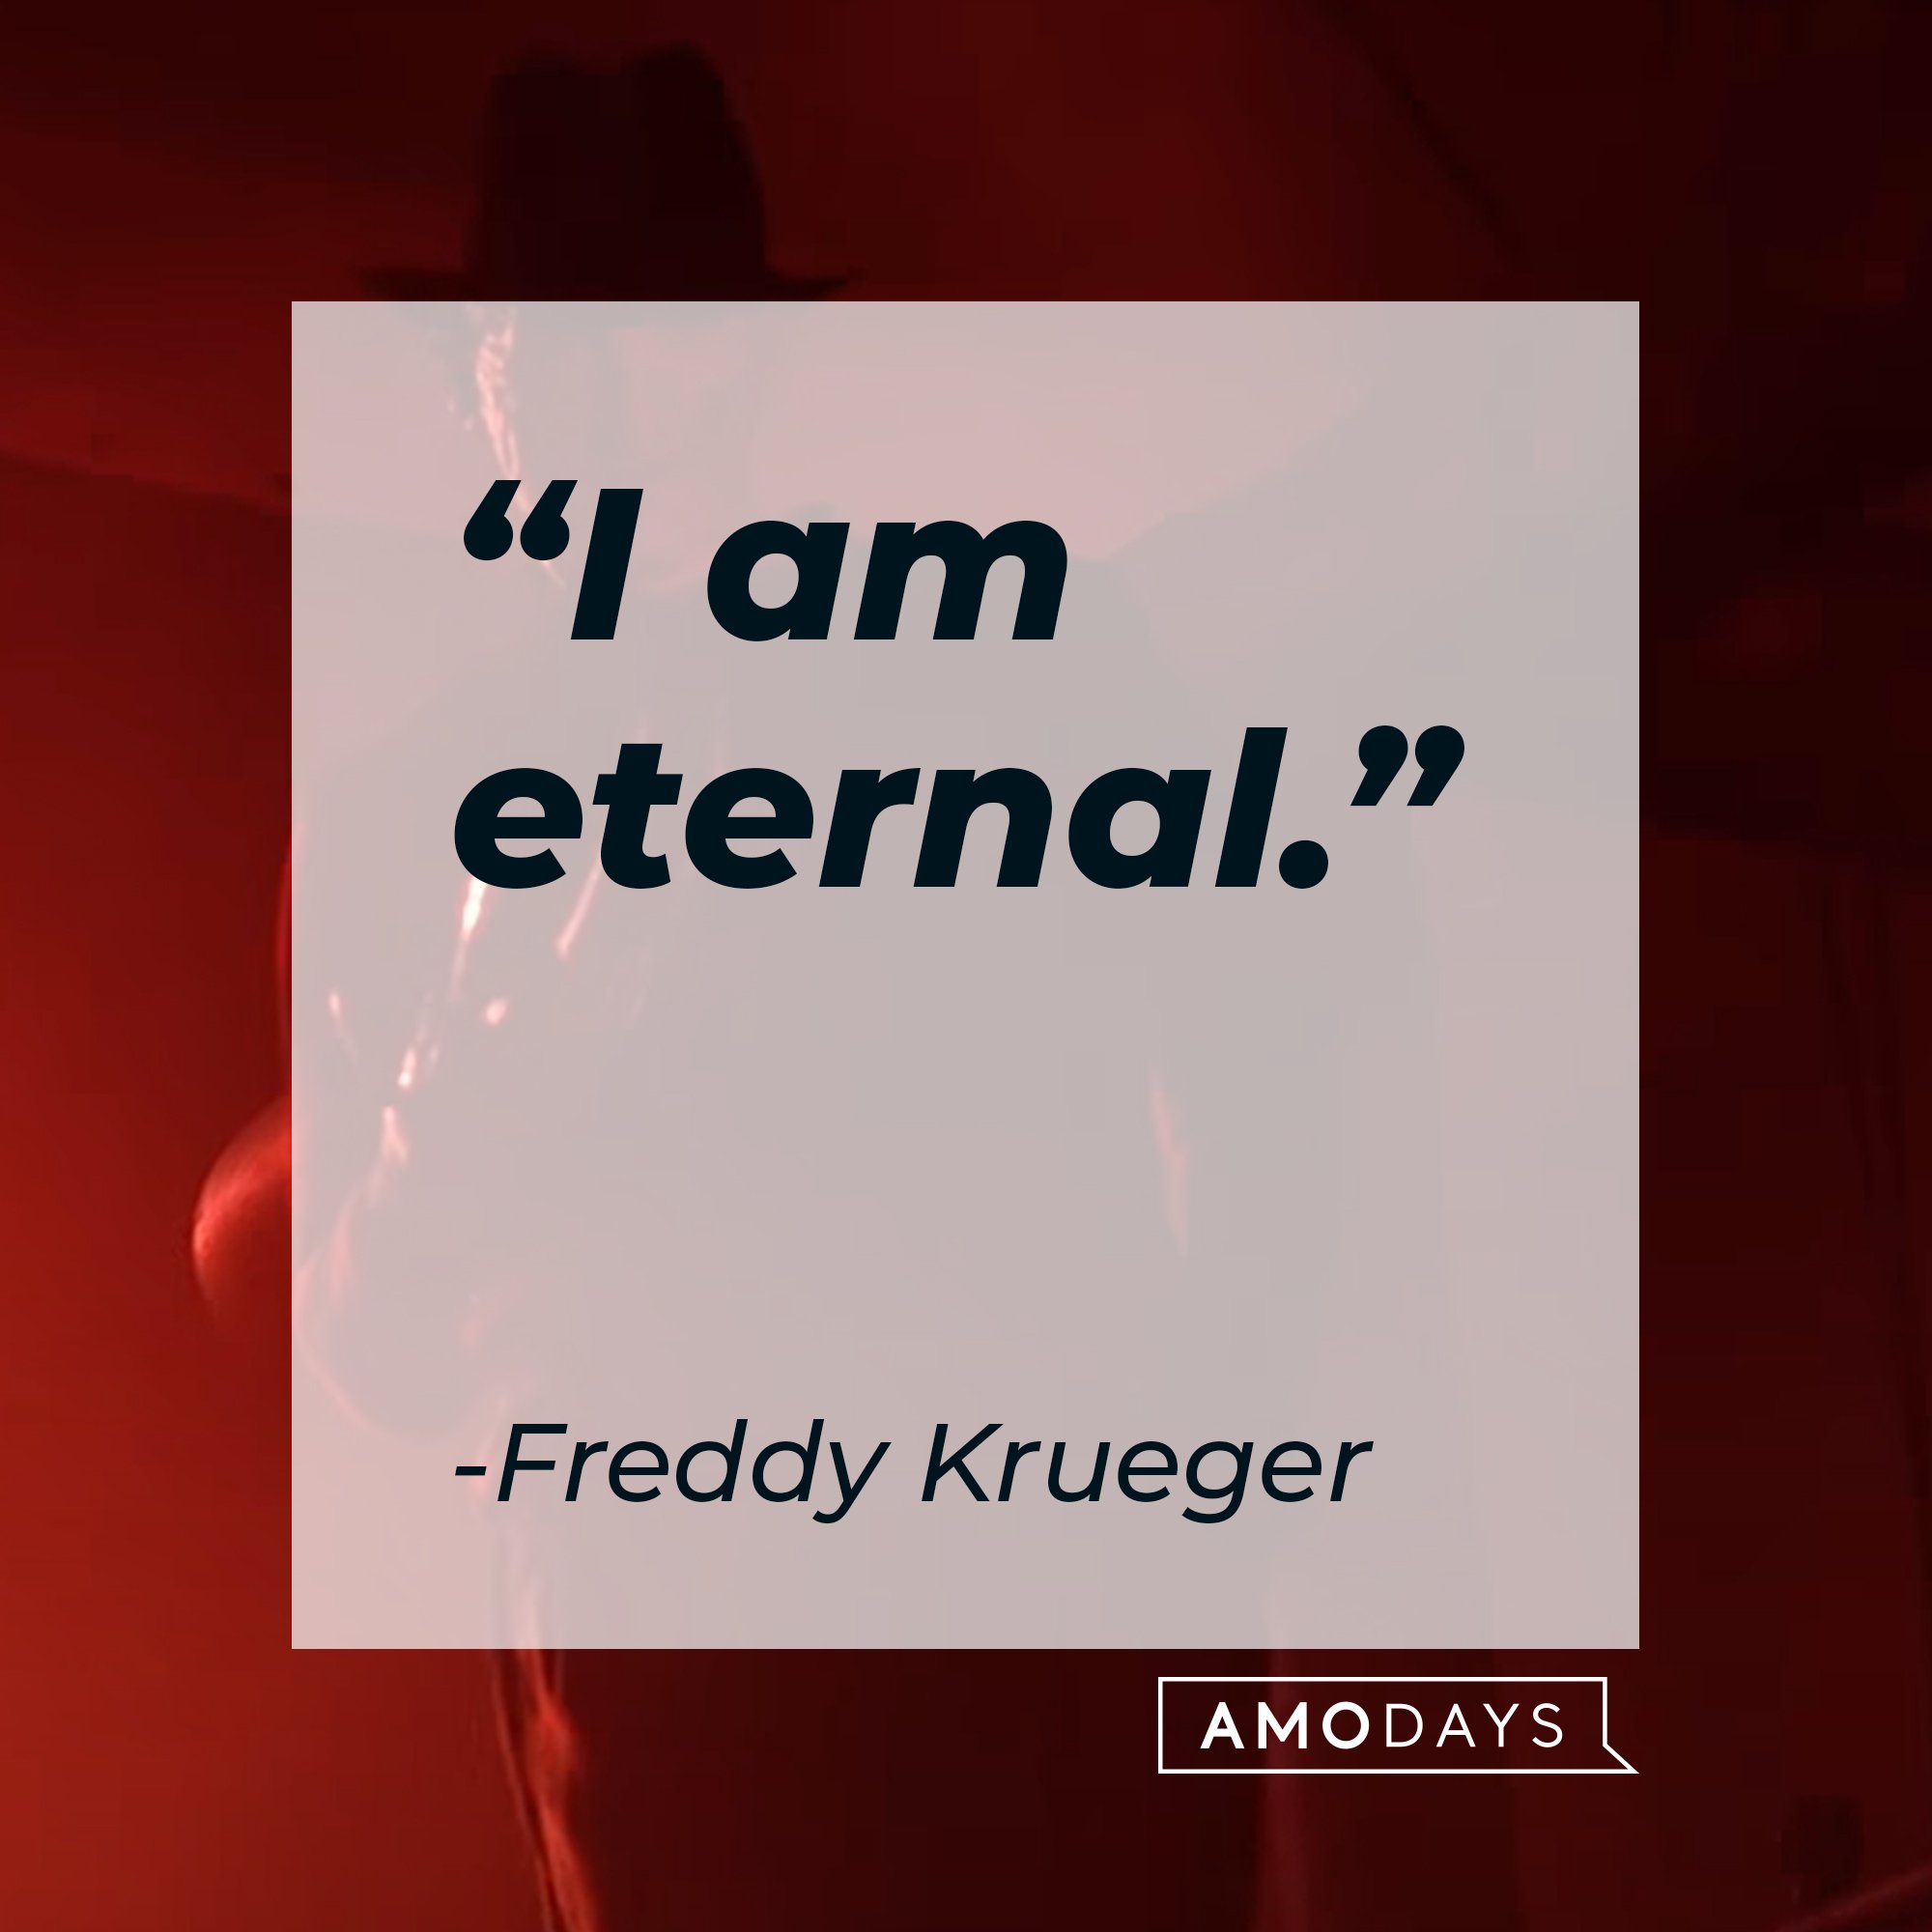 Freddy Krueger’s quote: “I am eternal." | Image: AmoDays